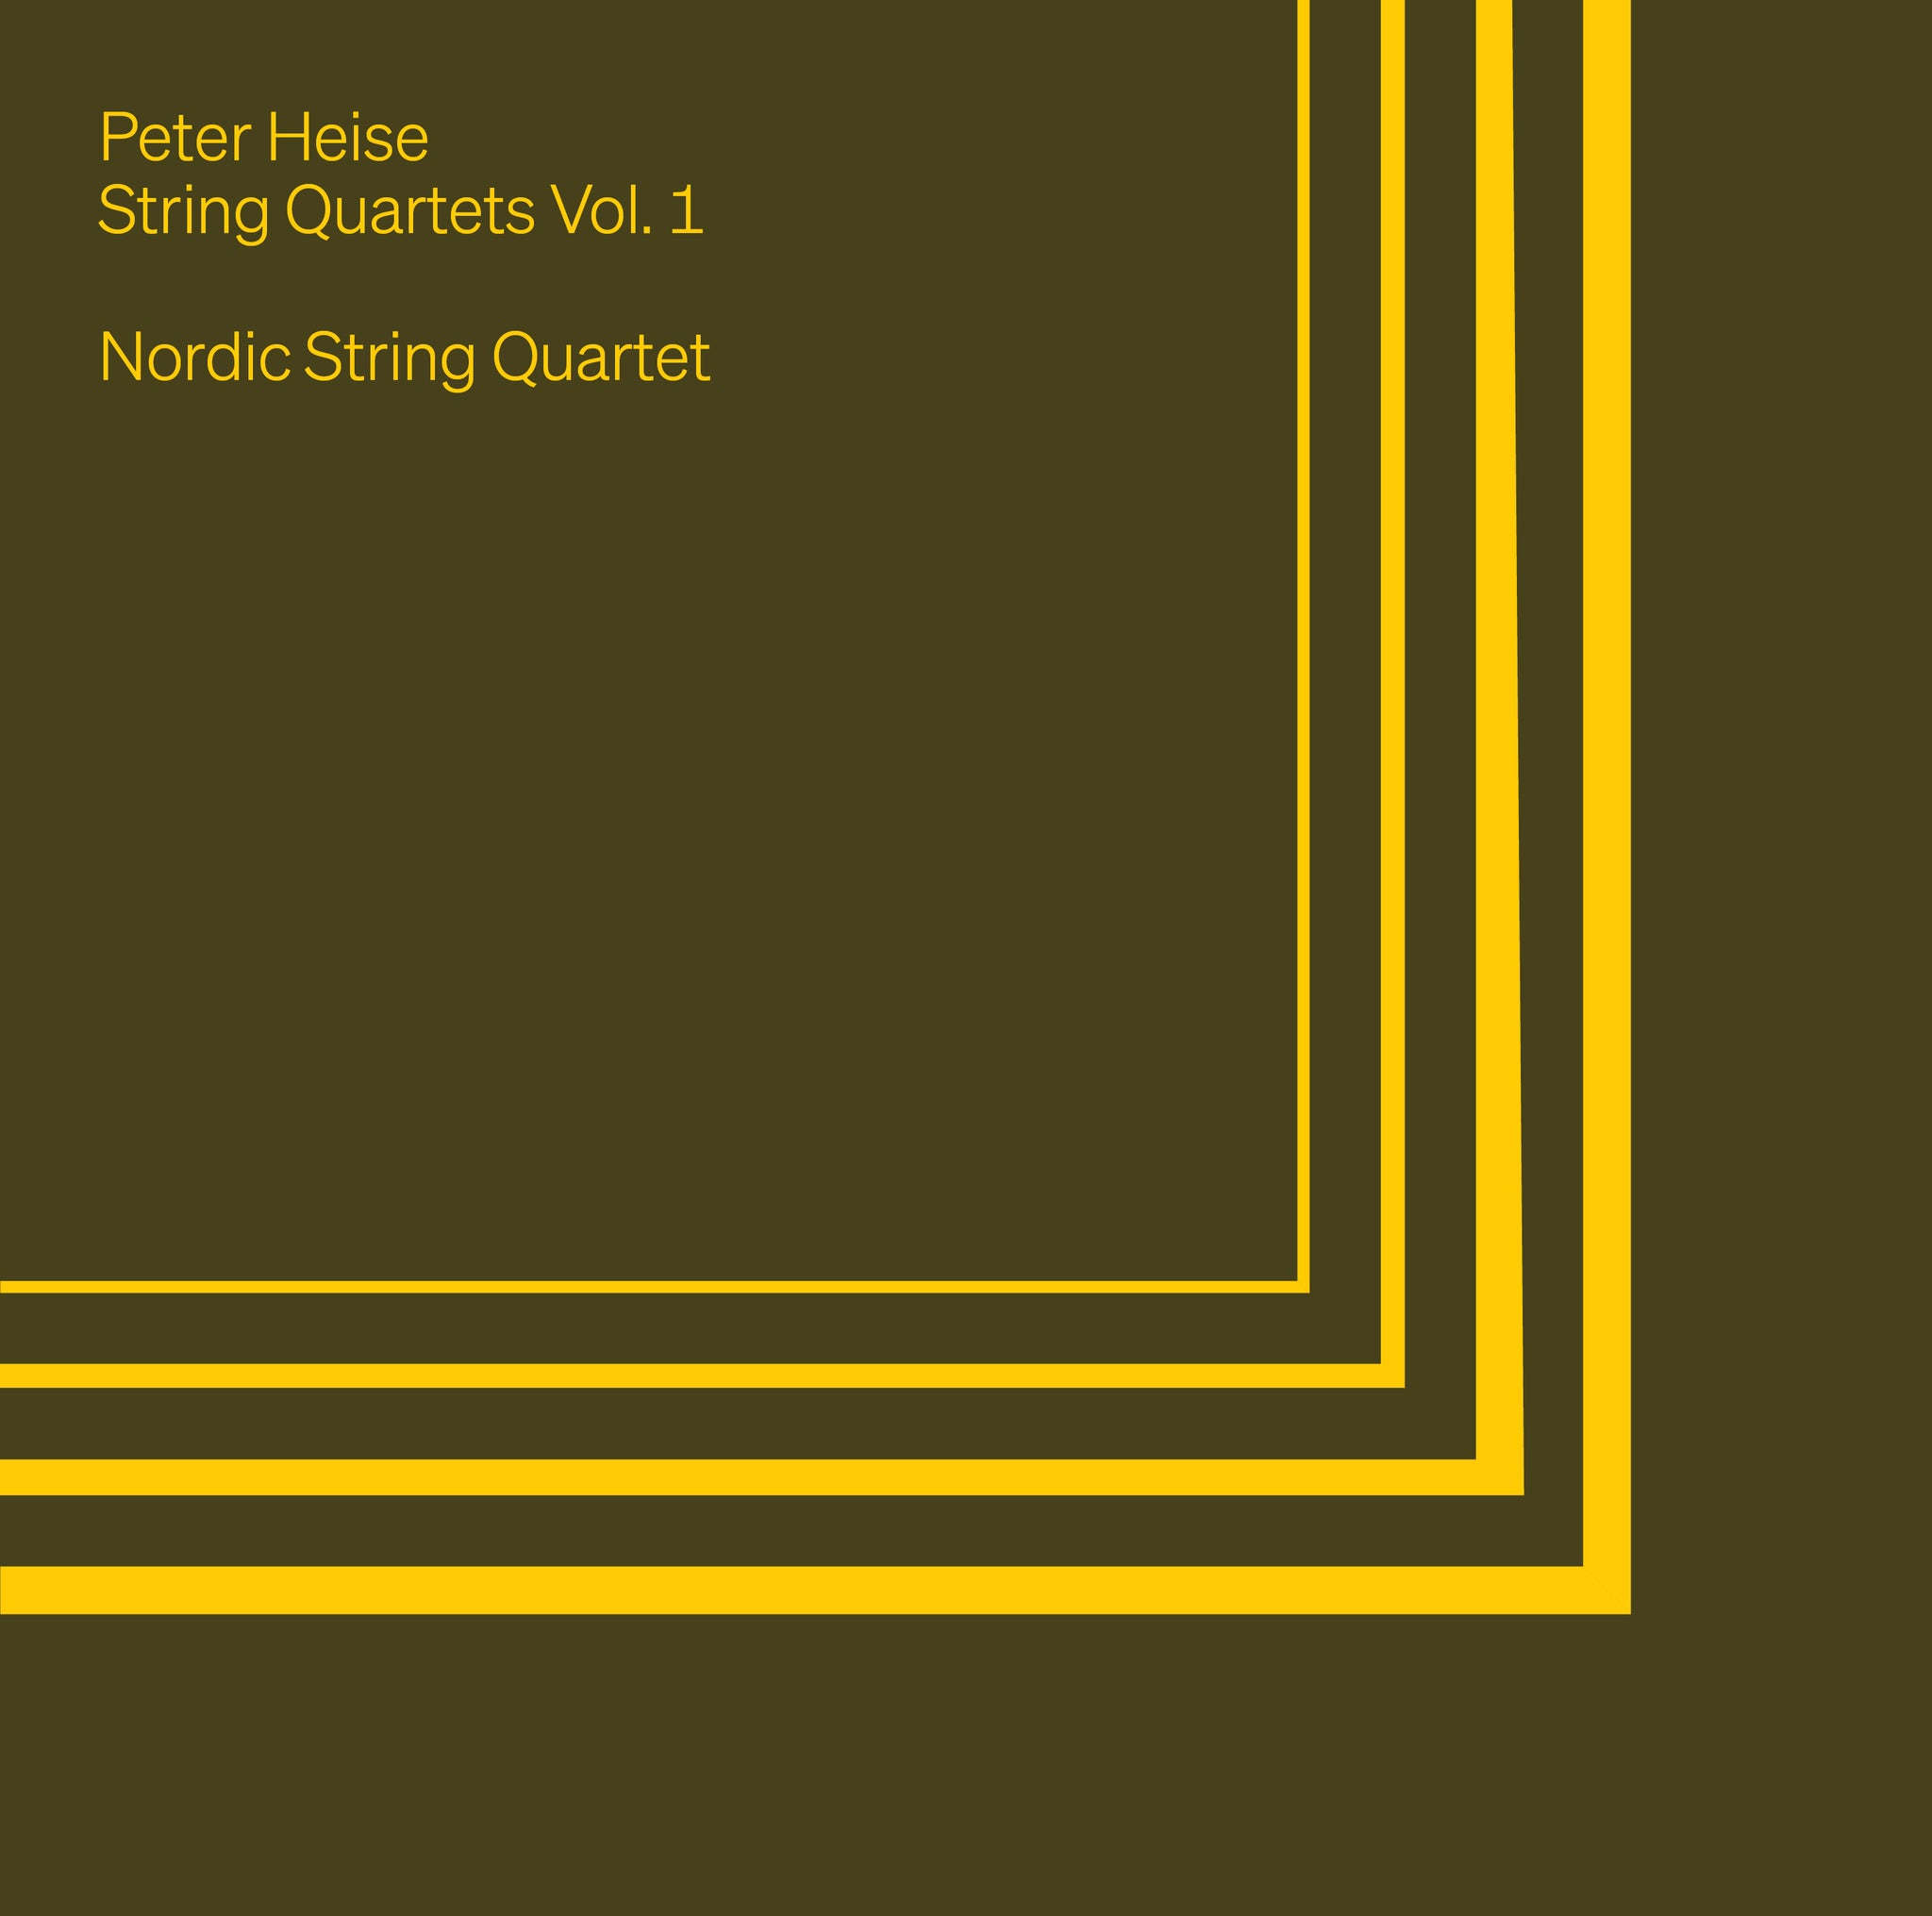 Heise: The String Quartets, Vol. 1 / Nordic String Quartet